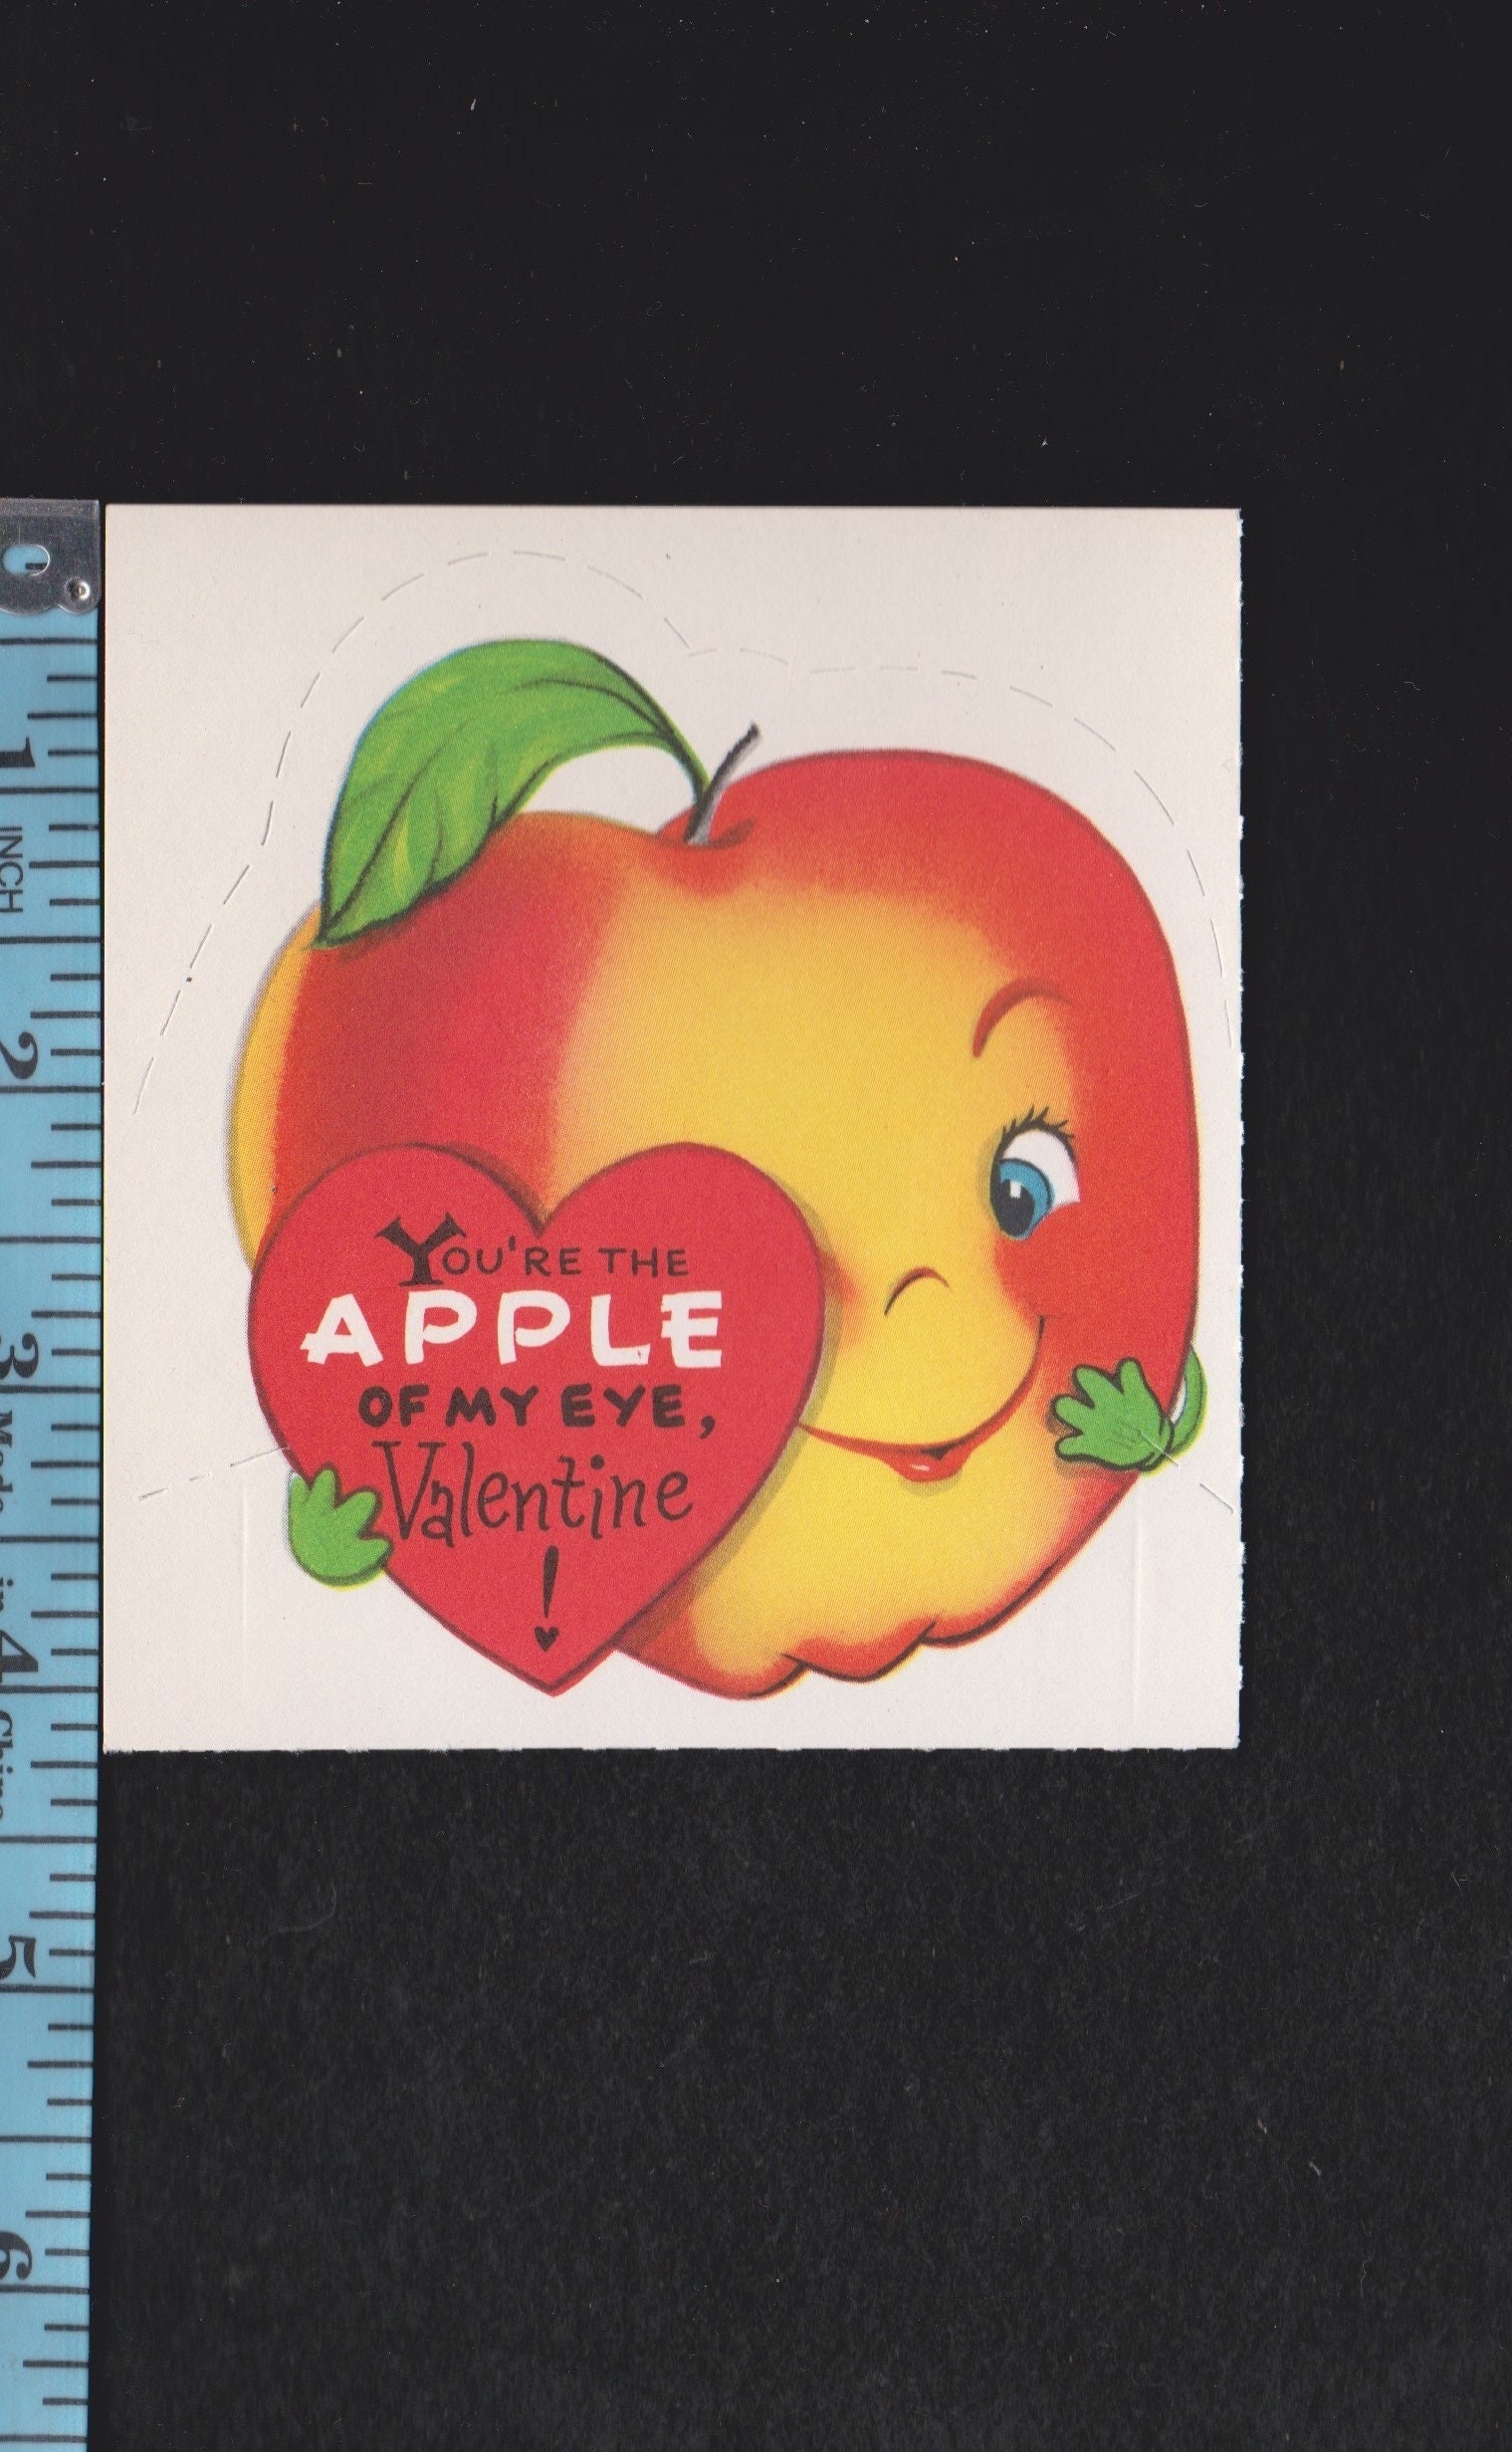 Vintage 1950s Valentine Card Anthropomorphic Apples in Love